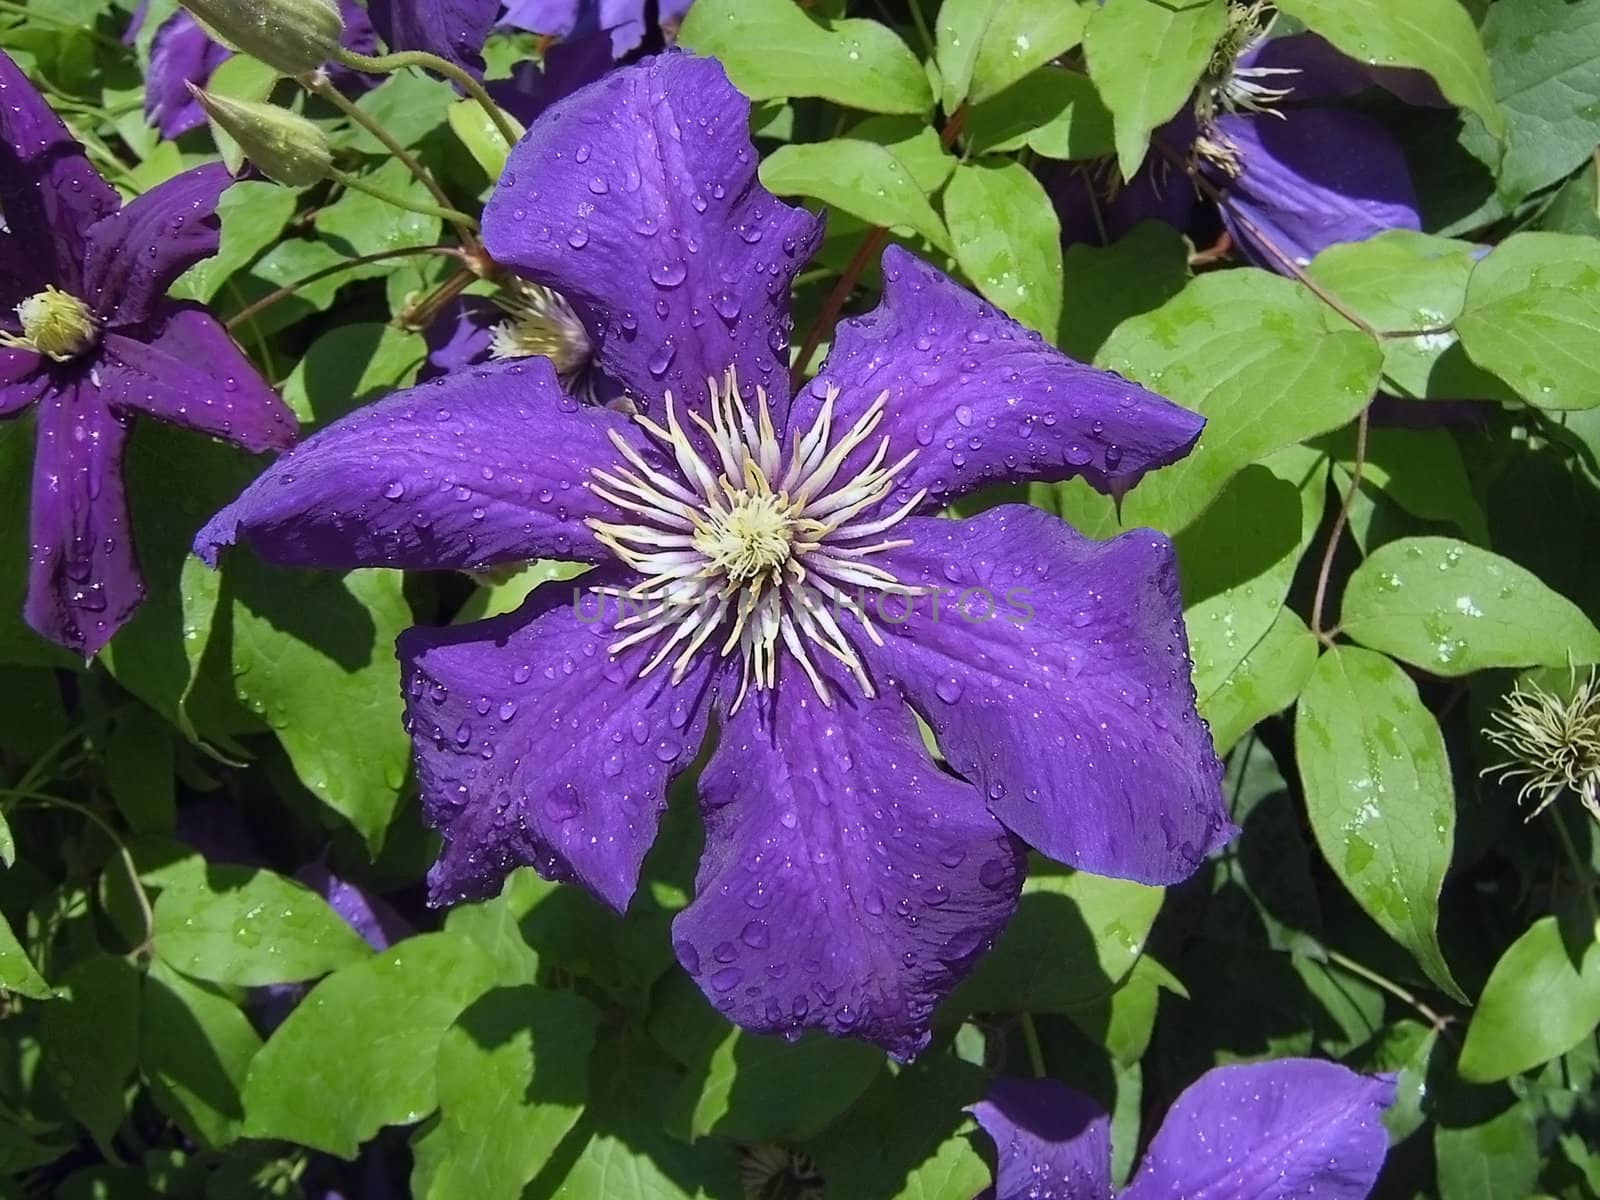 Violet flower, dew, green sheet, water, drop, plants, vegetation, summer, background, texture, type, aroma, bush, flowerses